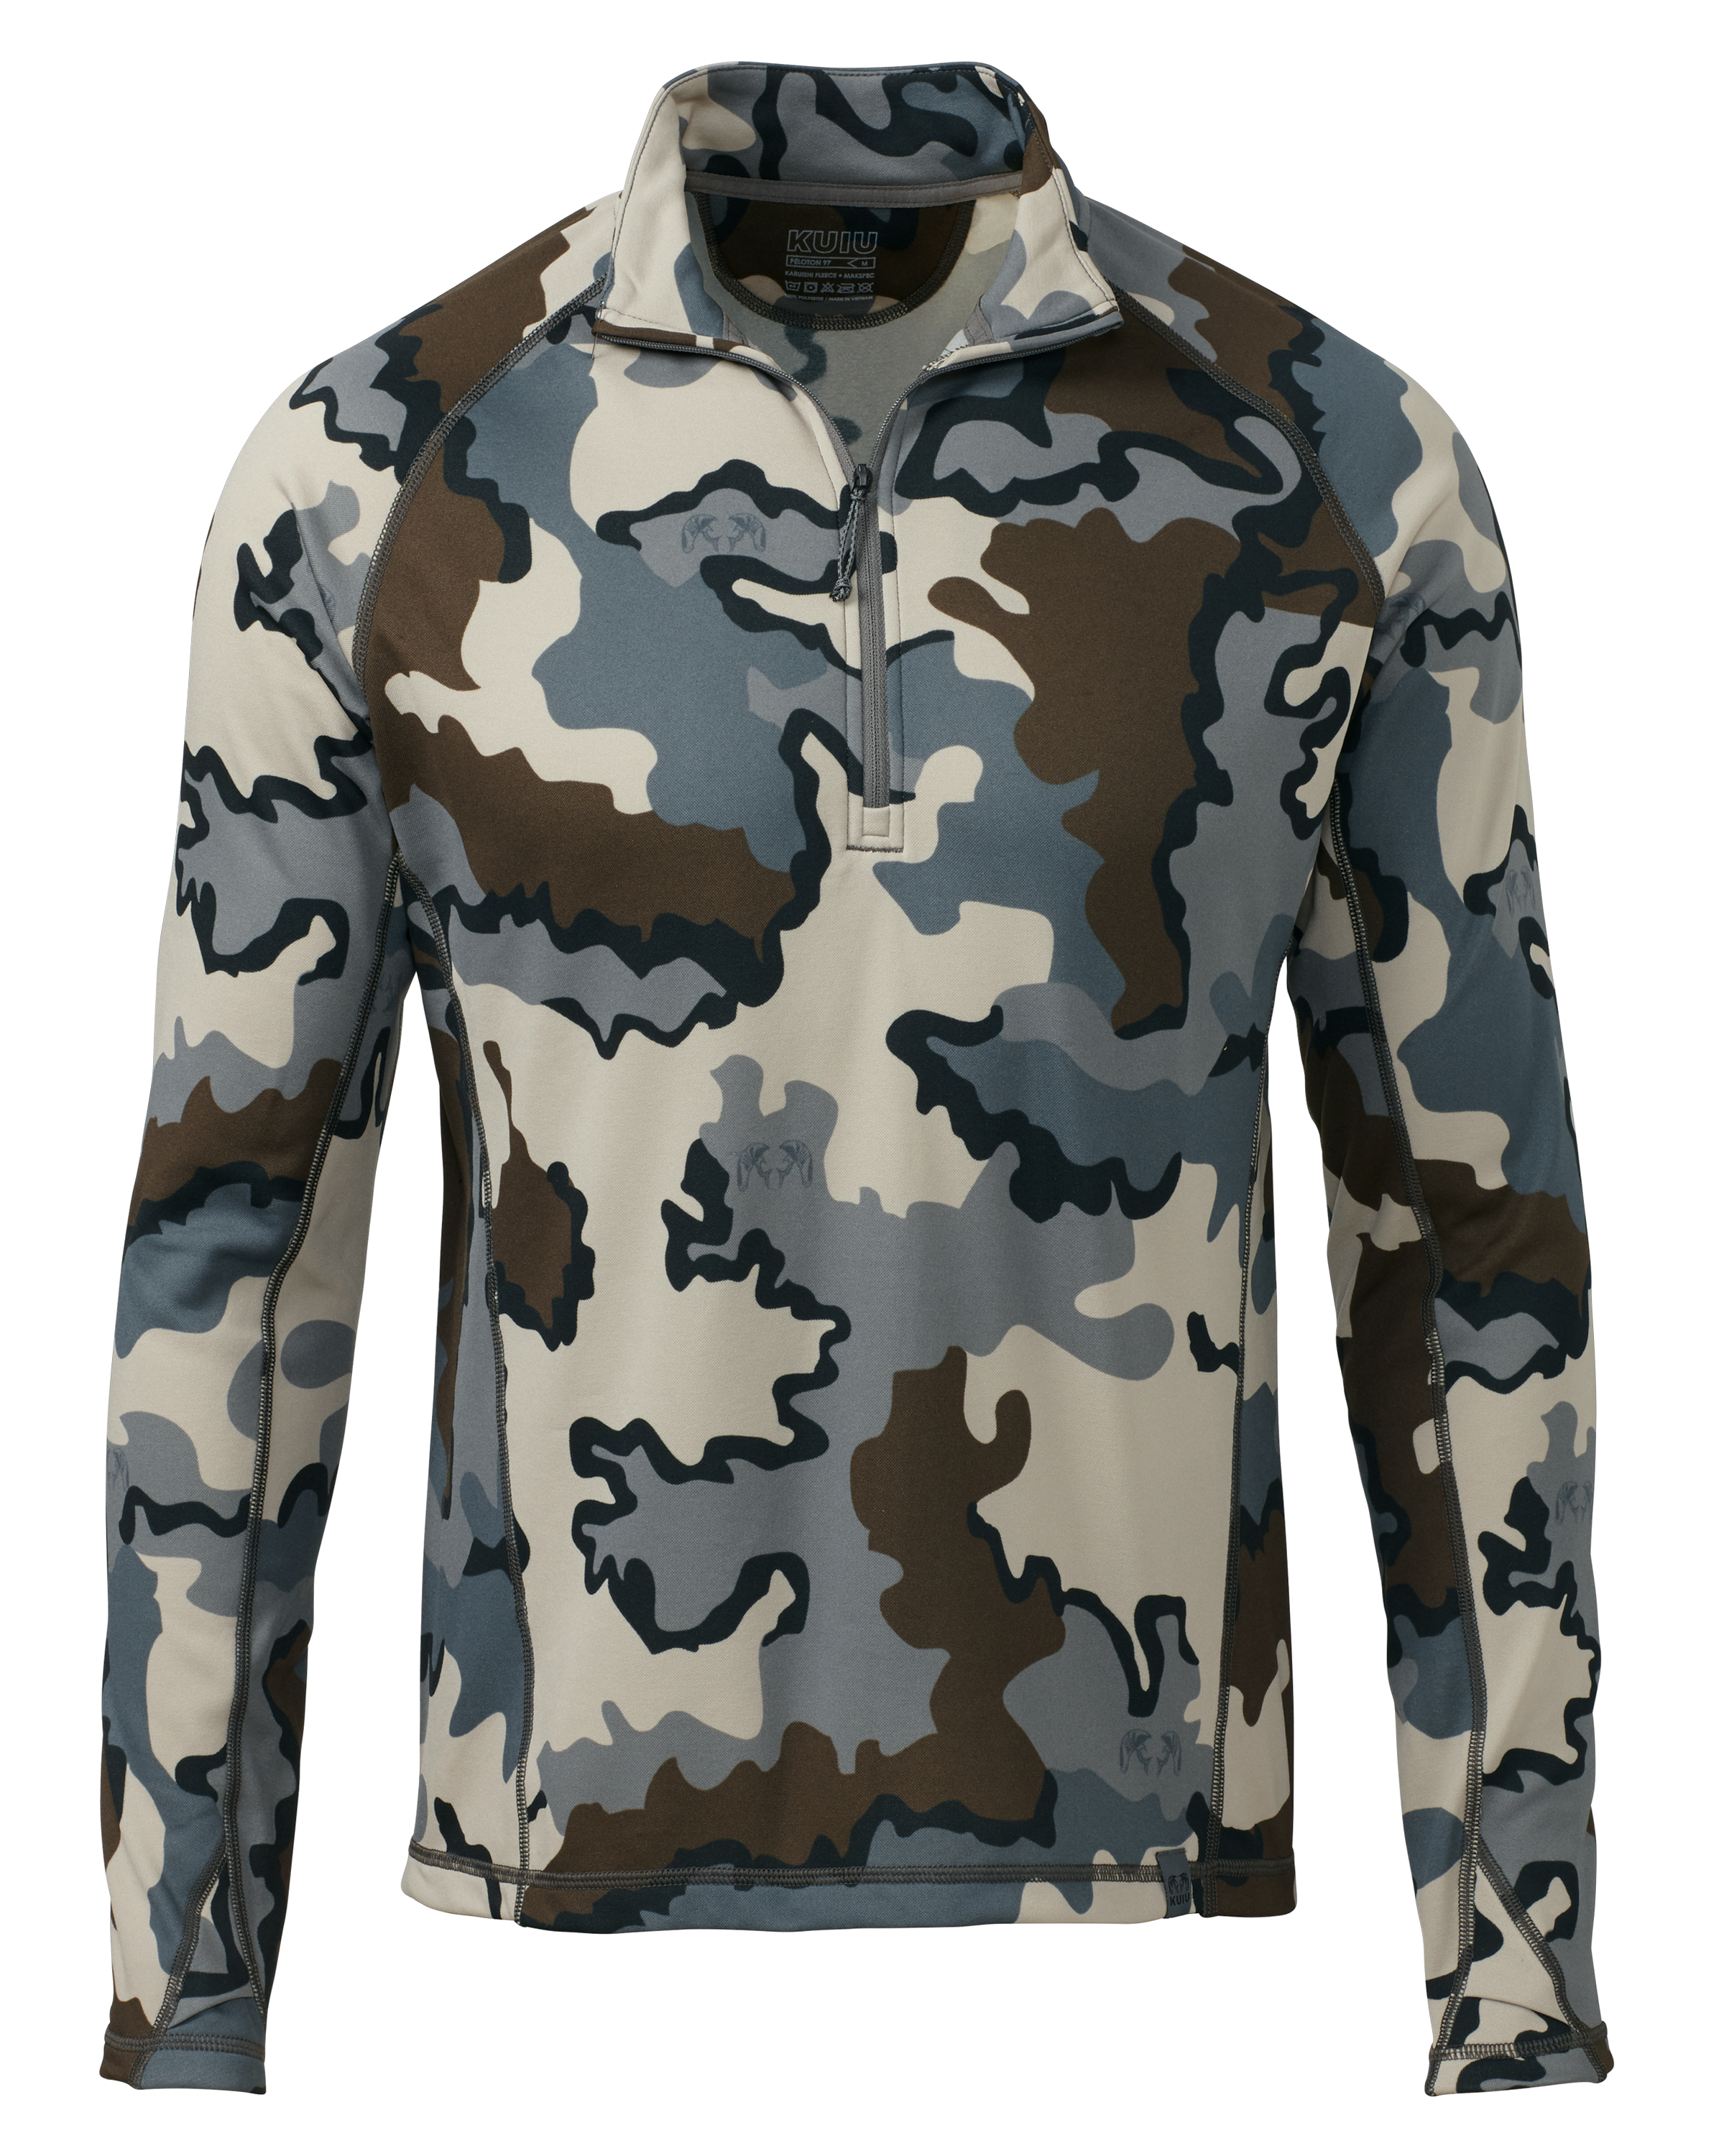 KUIU Peloton 97 Fleece Zip Hunting Shirt in Vias | Large